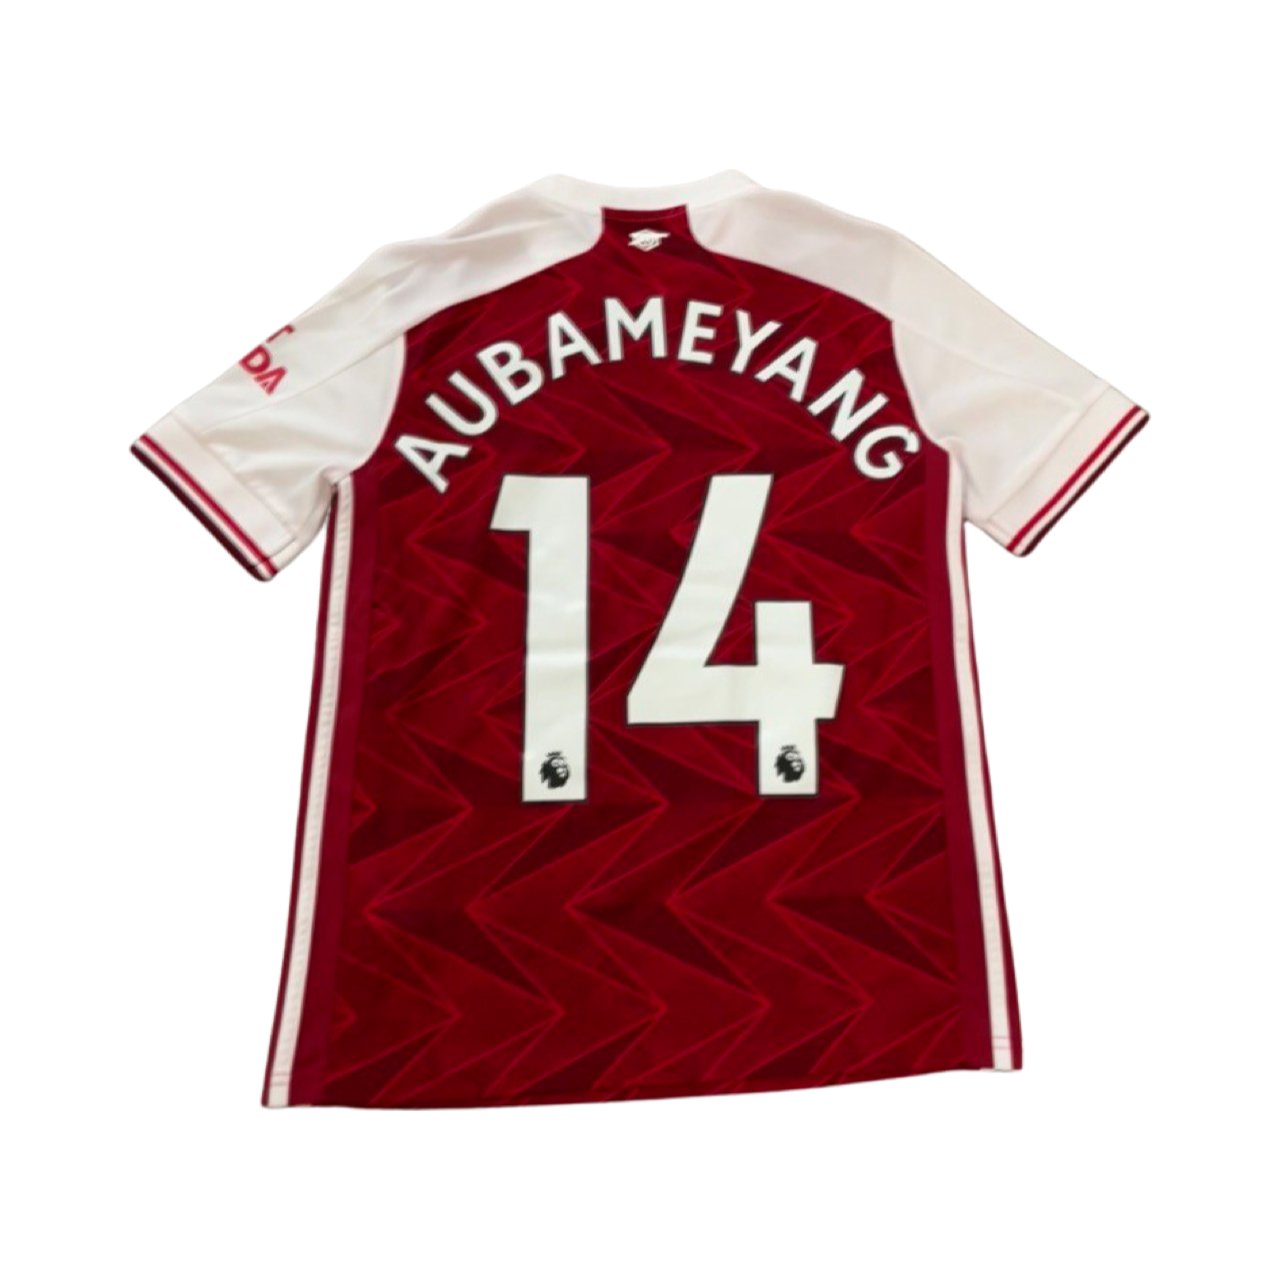 Arsenal FC Aubameyang - Adidas children football jersey 13/14YO - Preloved - Soul and Sense Streetwear